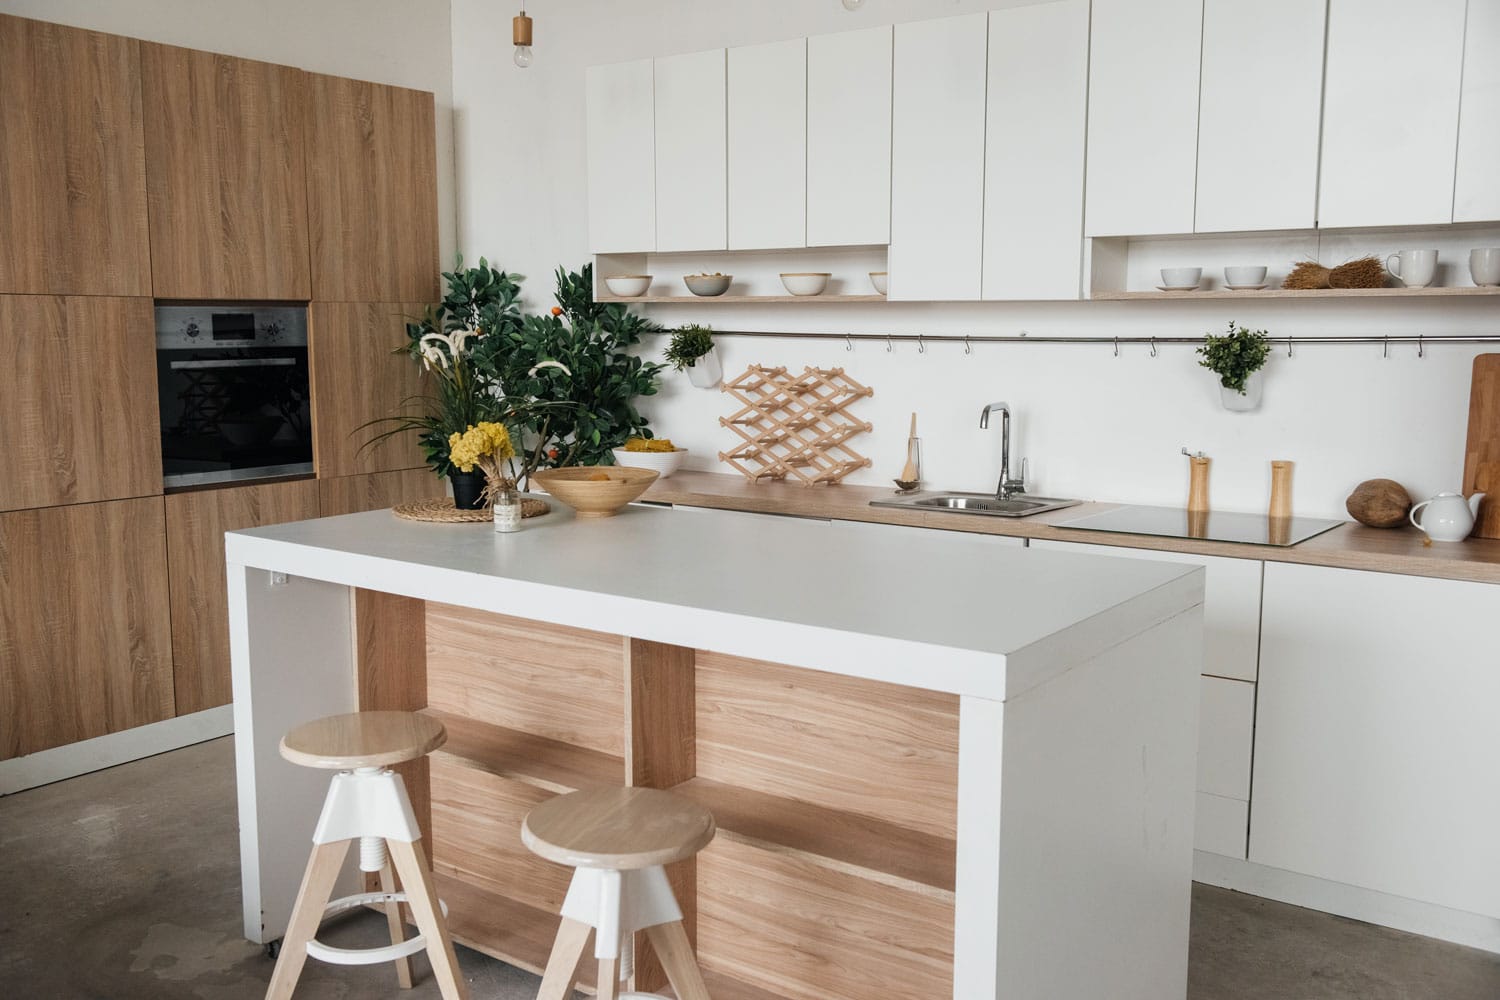 A two-seater kitchen Island inside a modern kitchen